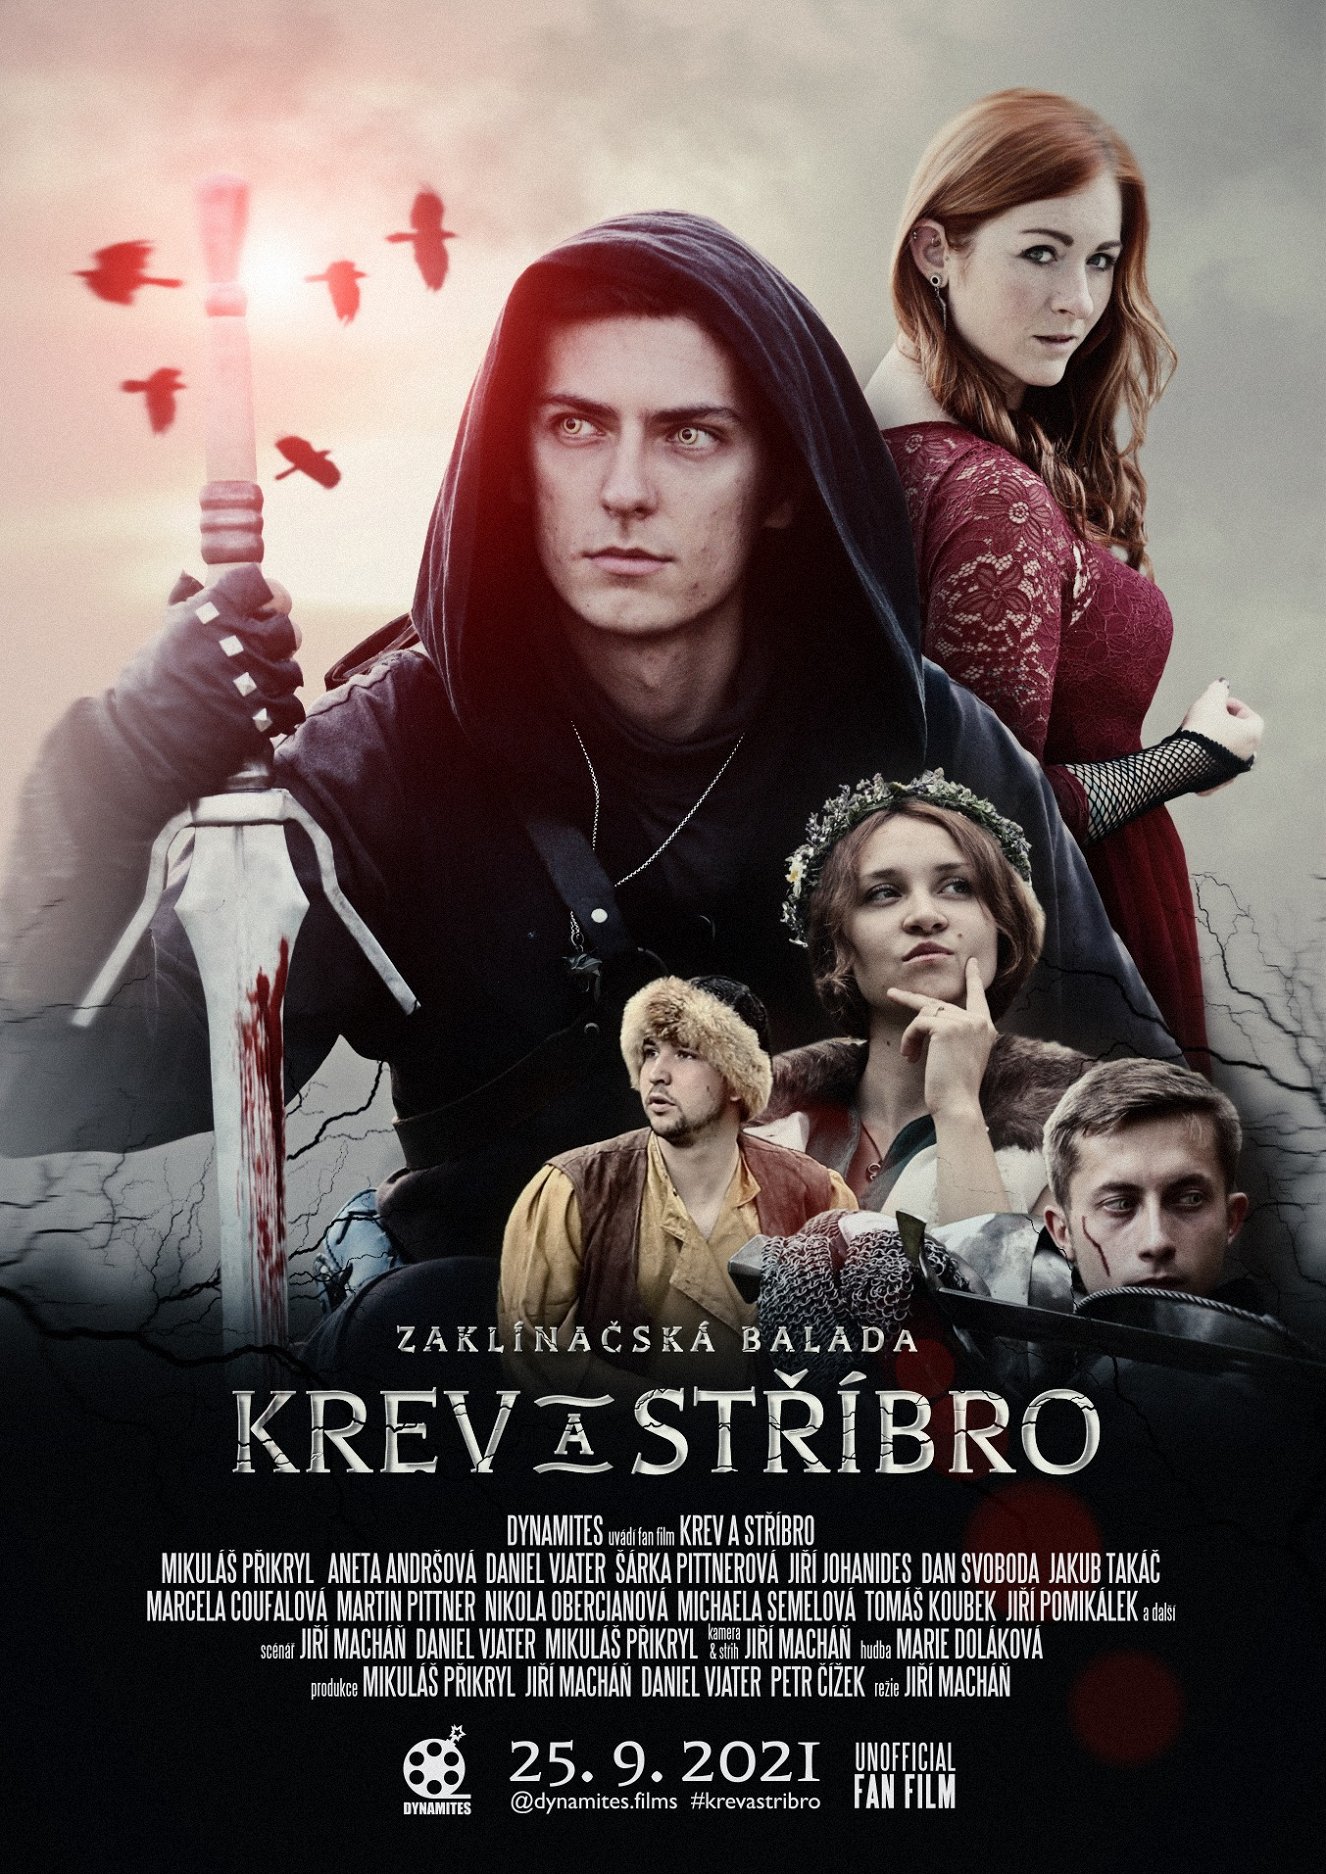 Plakát pro film “Krev a stříbro”